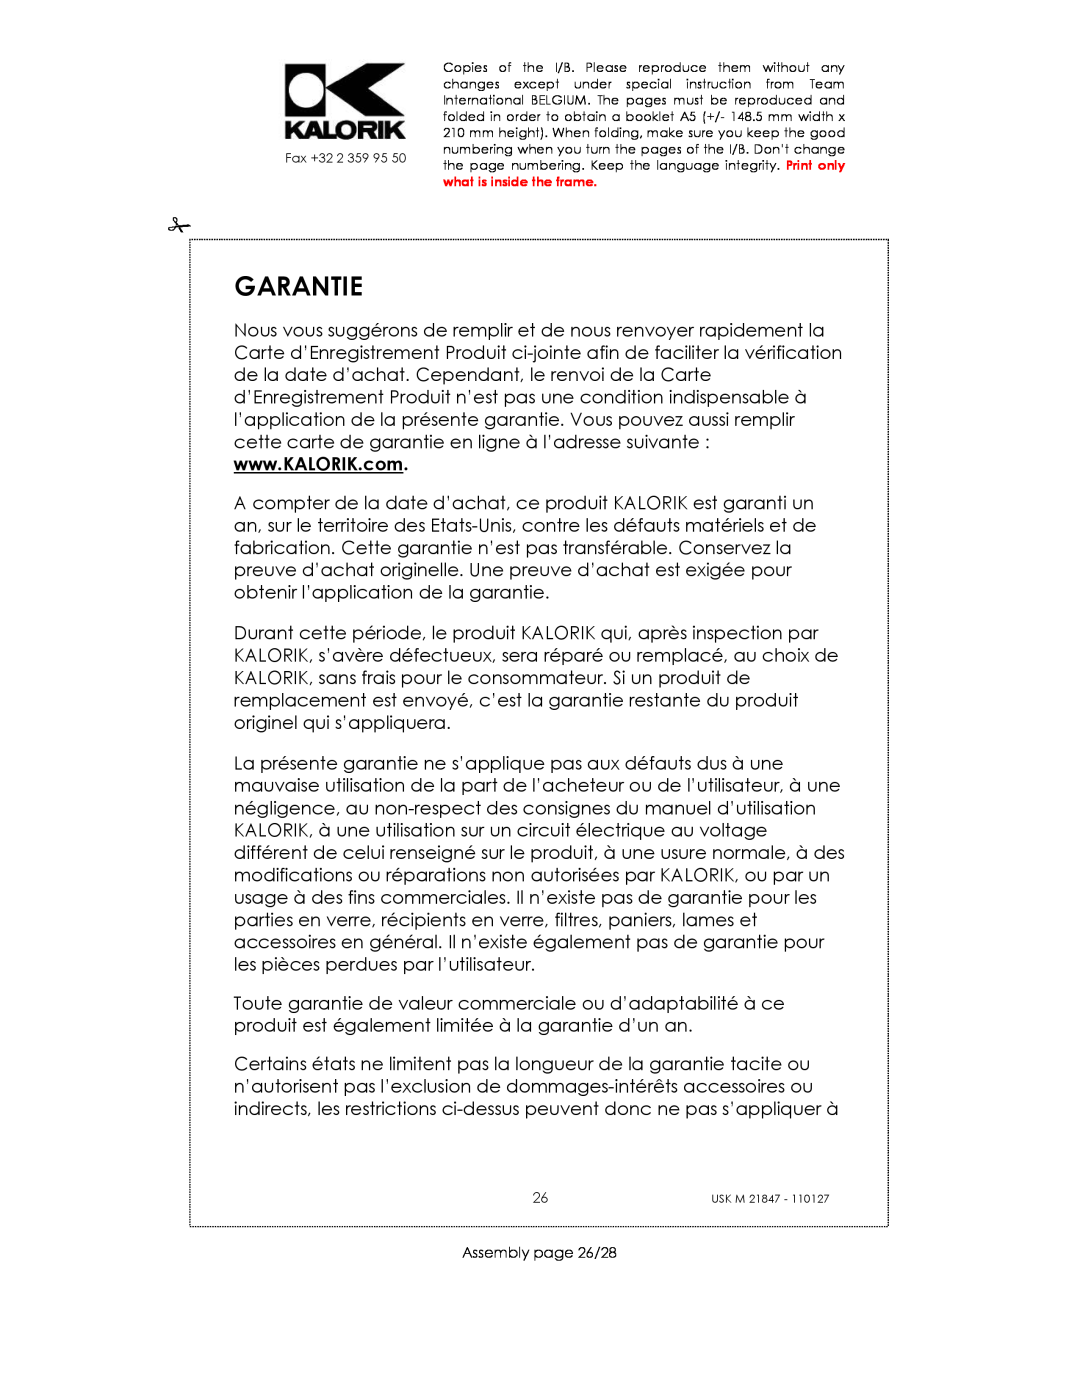 Kalorik USK M 21847 manual Garantie, Assembly page 26/28 